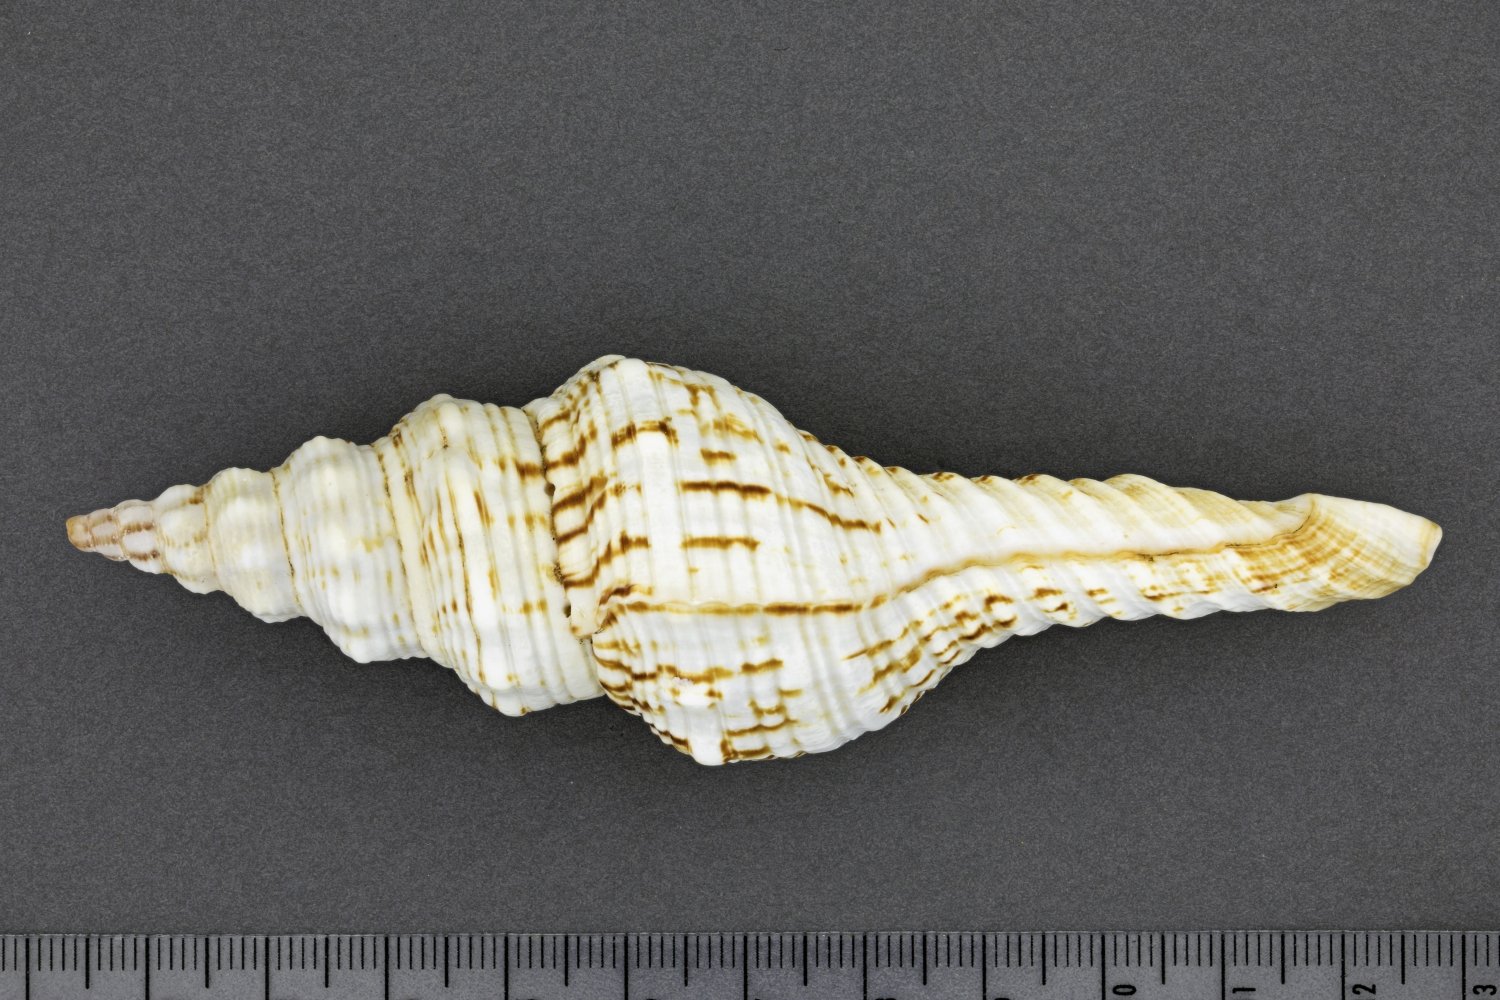 UMB_0001745 | Marmorofuscus nicobaricus, Nicobaren-Spindel | Schale (Gehäuse) (Übersee-Museum Bremen CC BY-SA)